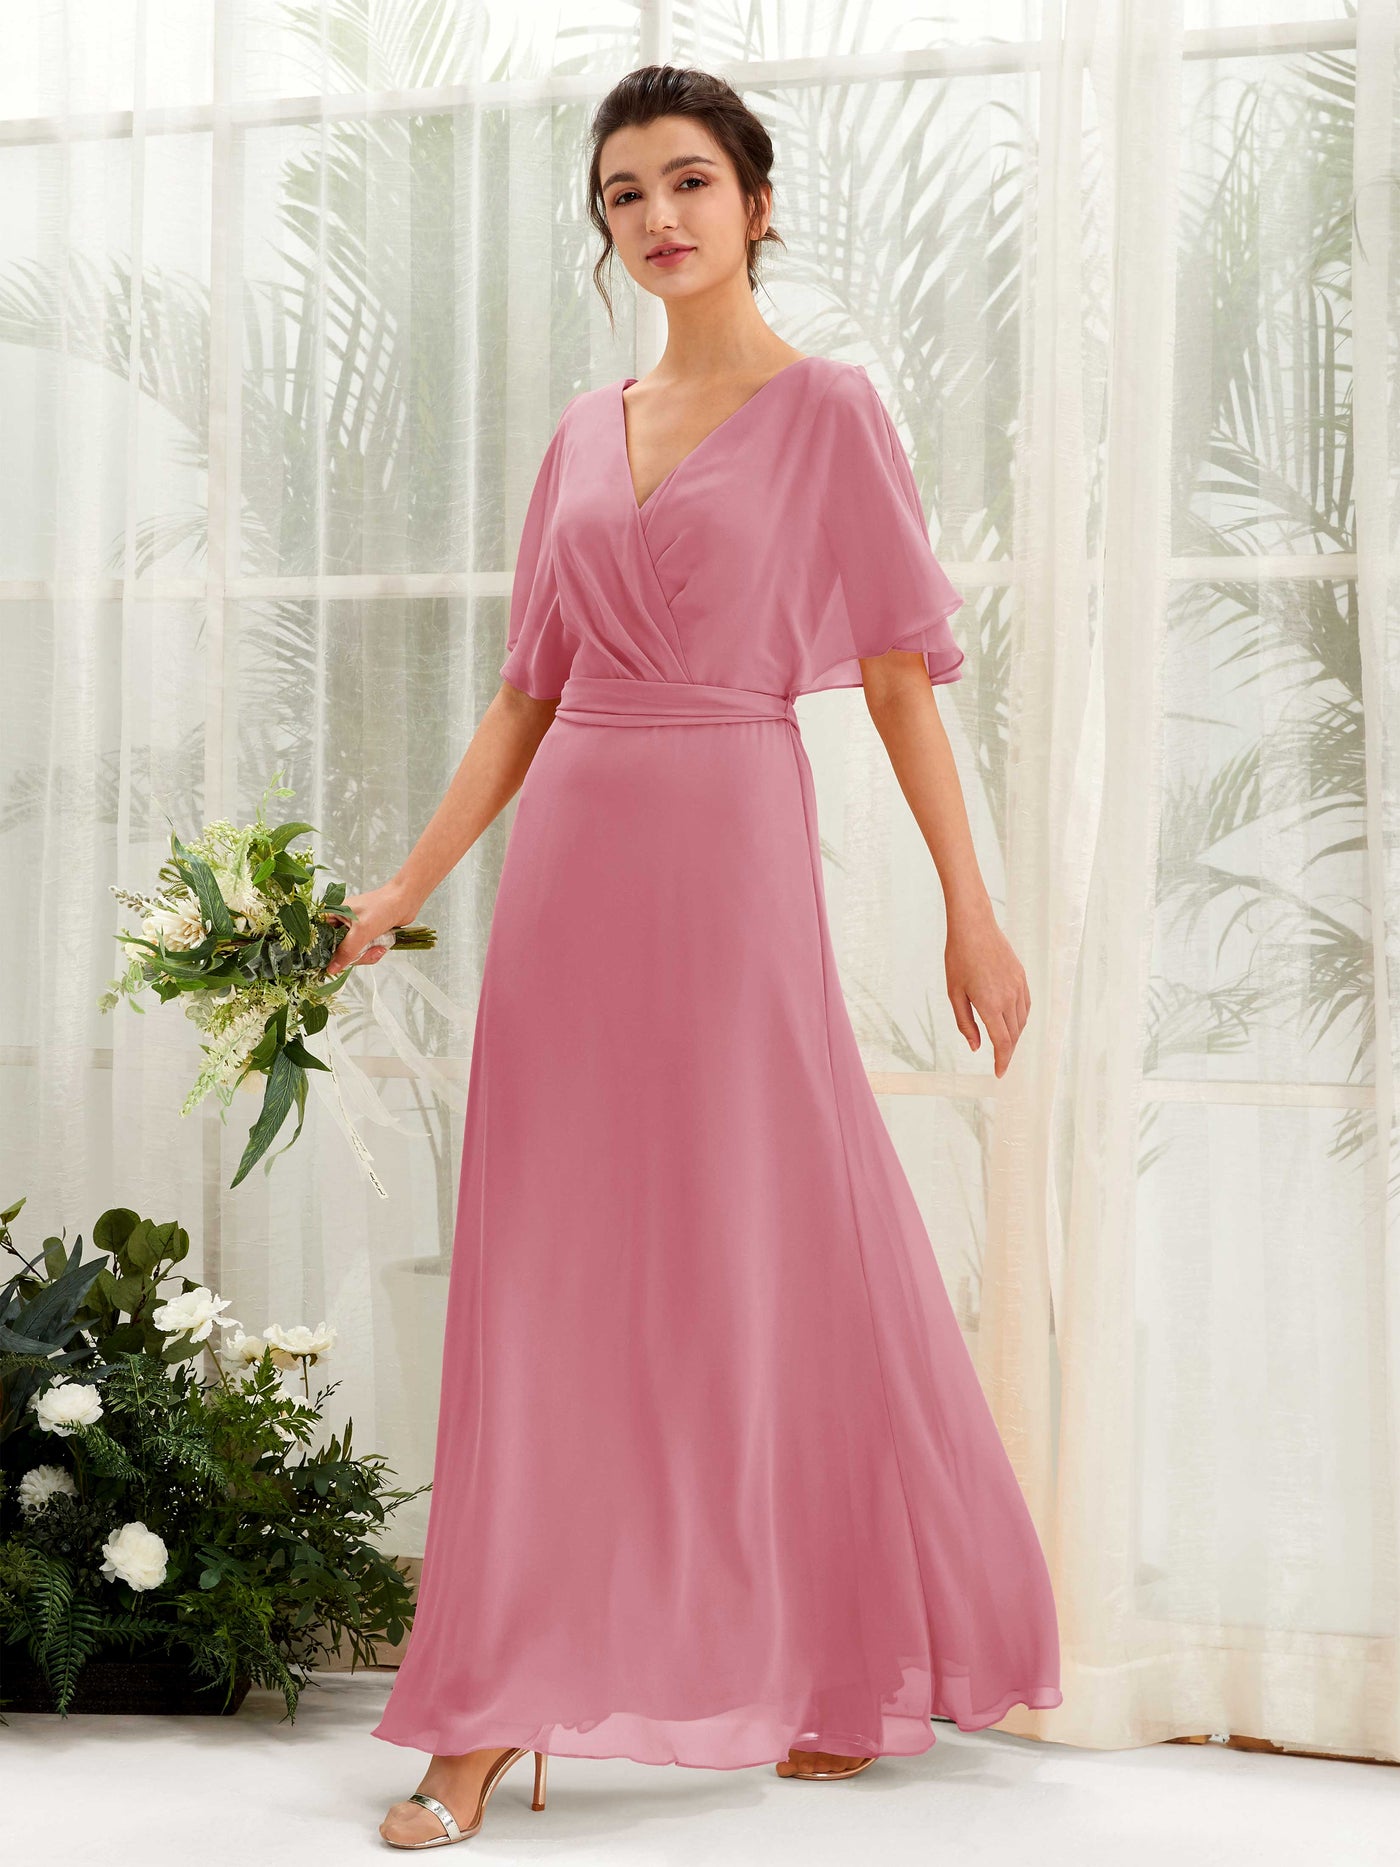 Desert Rose Bridesmaid Dresses Bridesmaid Dress A-line Chiffon V-neck Full Length Short Sleeves Wedding Party Dress (81222411)#color_desert-rose